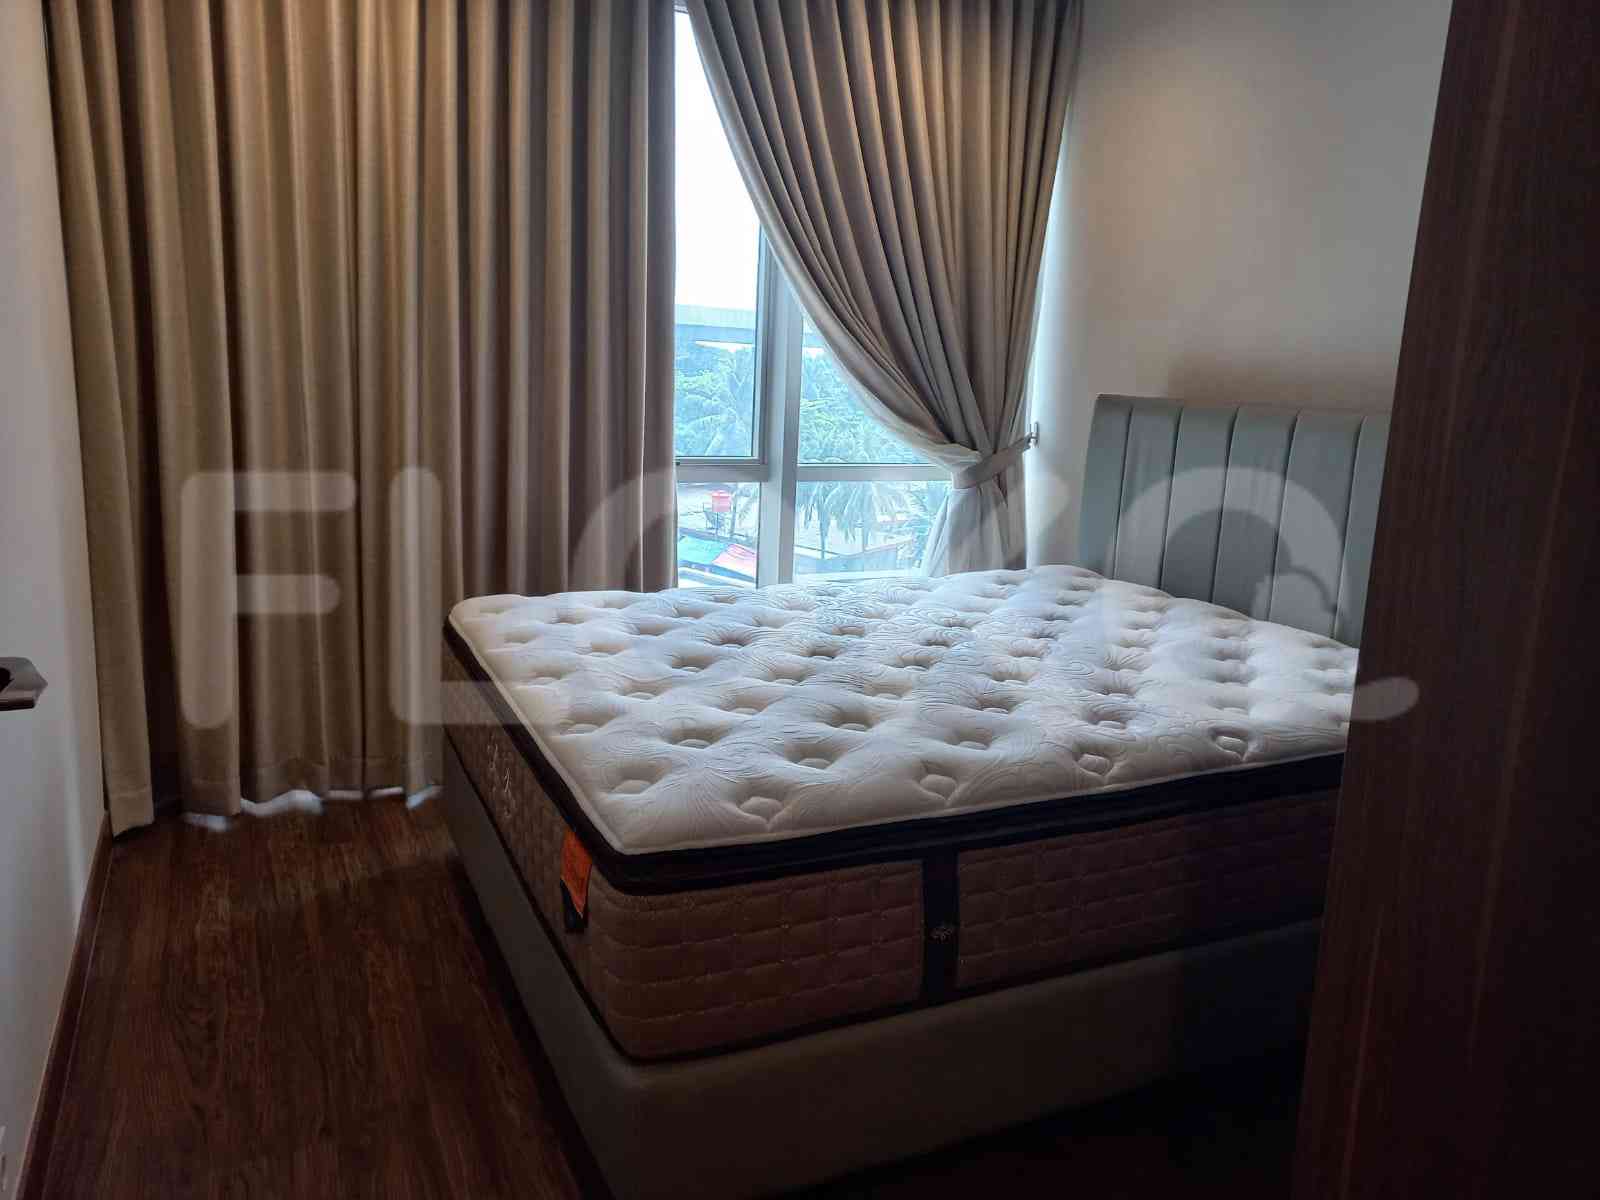 2 Bedroom on 5th Floor for Rent in Apartemen Branz Simatupang - ftb525 1